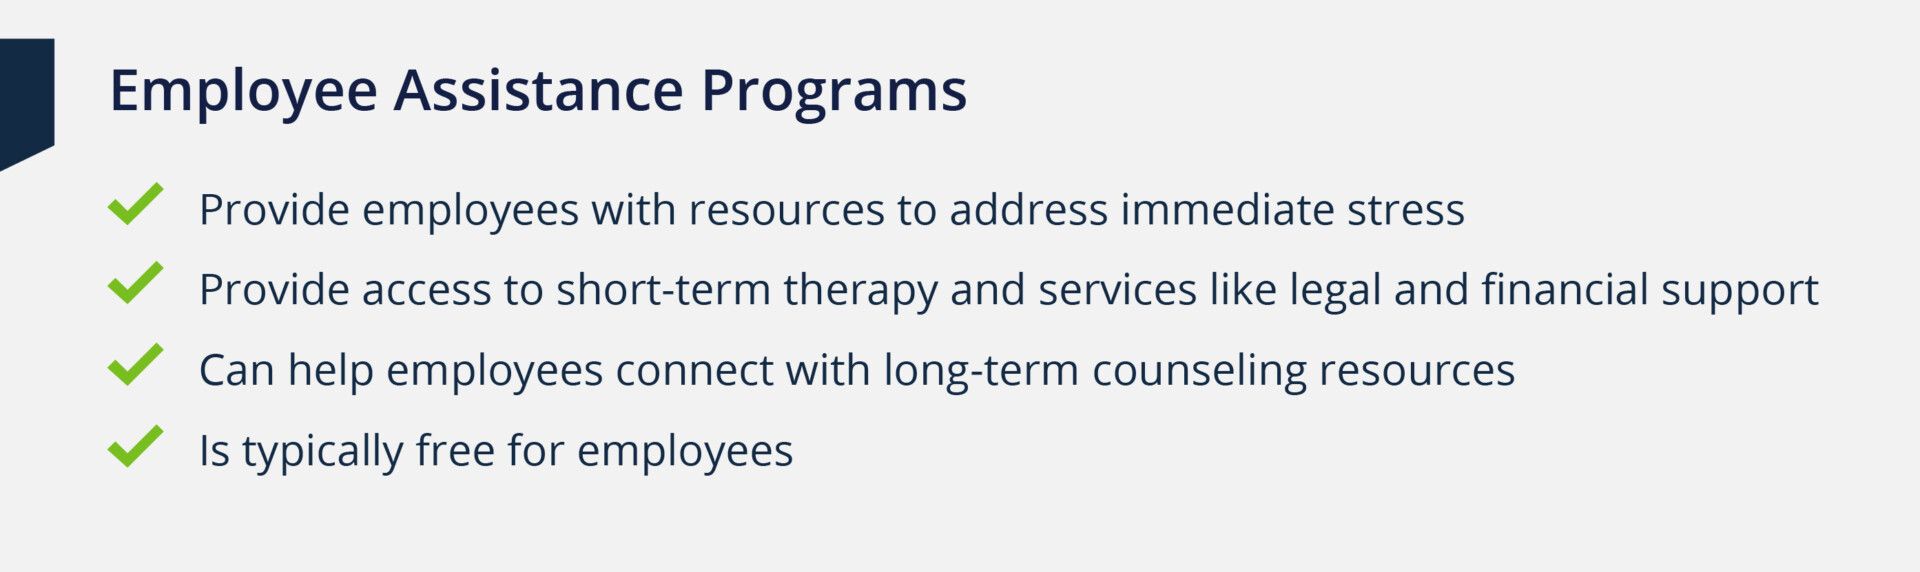 Employee assistance programs checklist